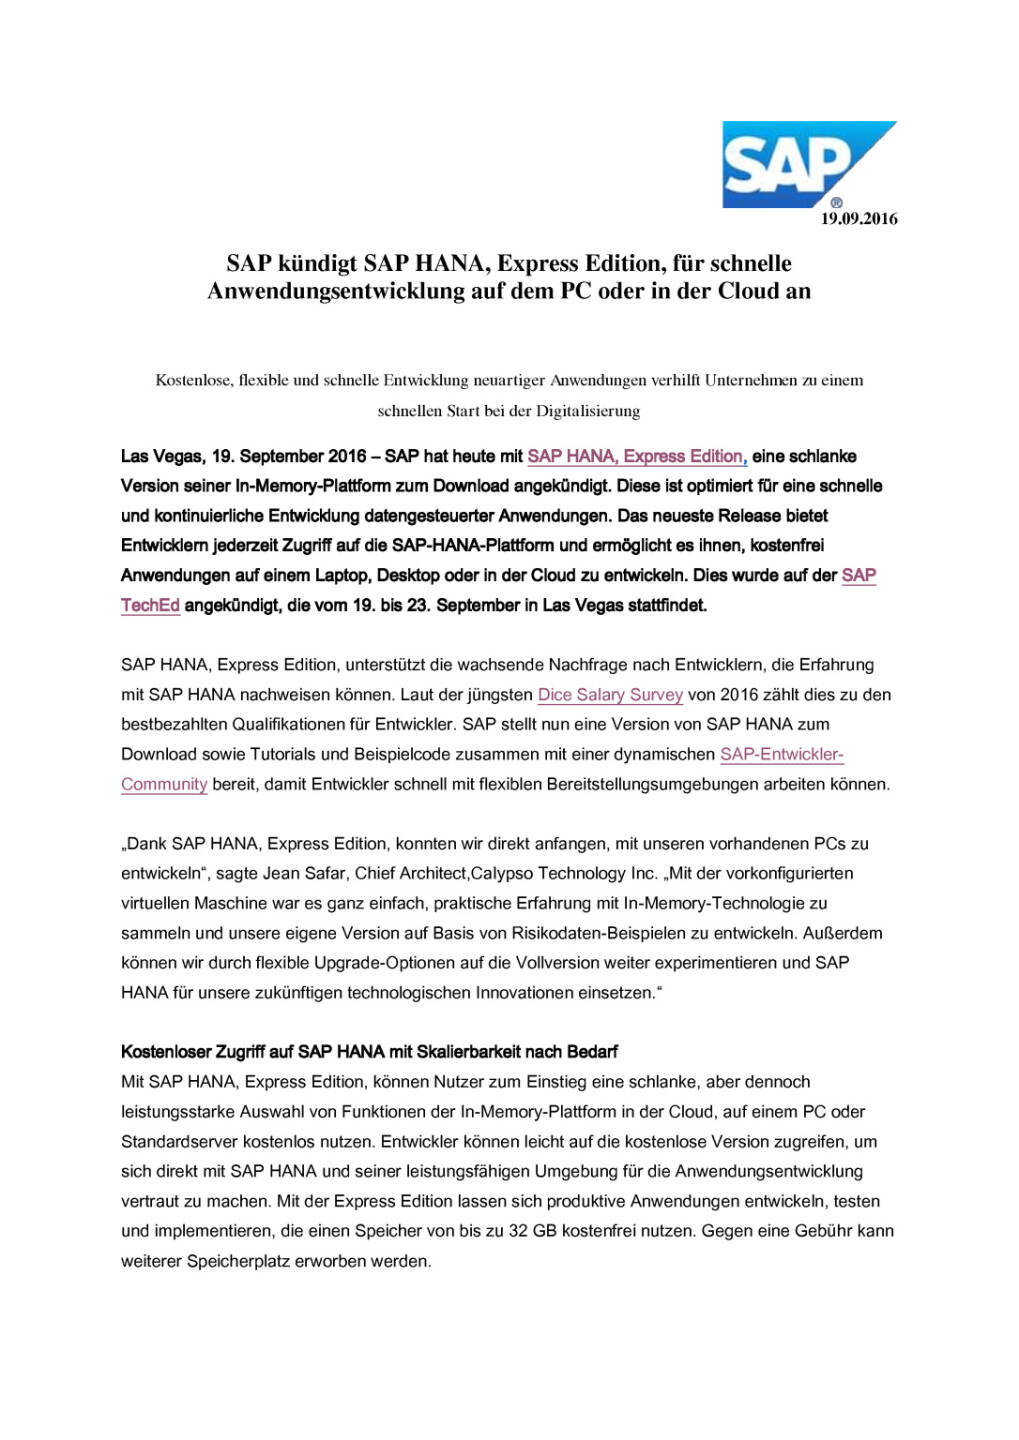 SAP Hana Express Edition, Seite 1/3, komplettes Dokument unter http://boerse-social.com/static/uploads/file_1798_sap_hana_express_edition.pdf